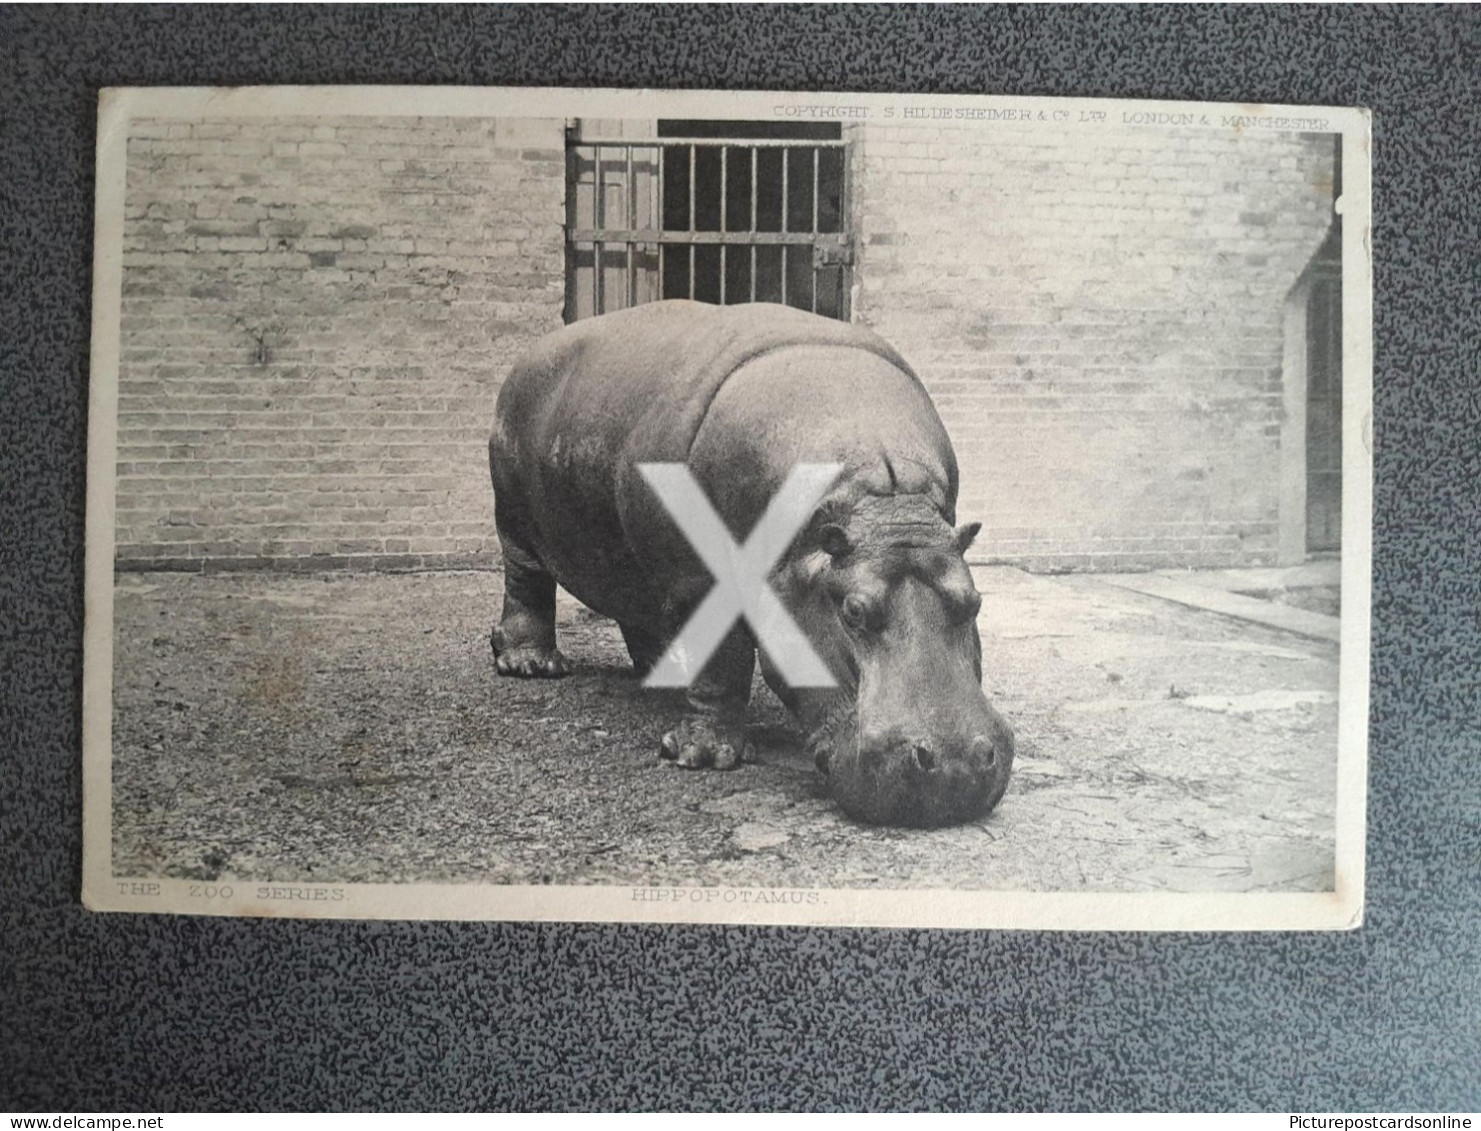 HIPPOPOTAMUS HILDESHEIMER & CO ZOO SERIES OLD B/W POSTCARD ANIMALS 1904 - Hippopotamuses